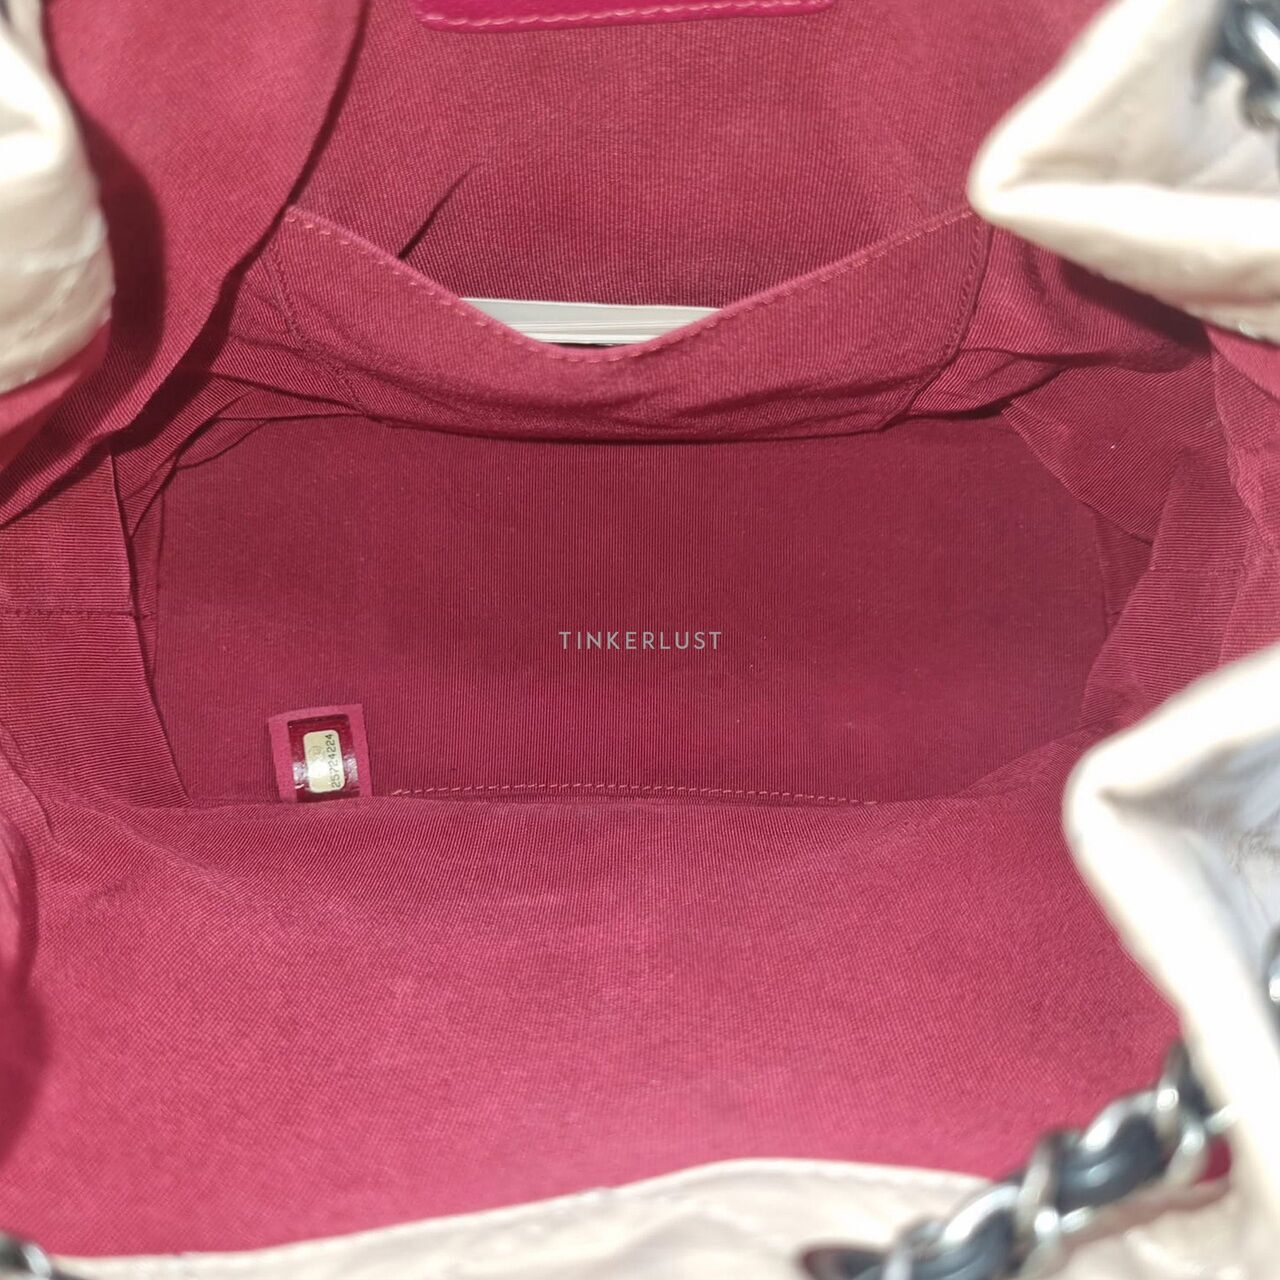 Chanel Gabrielle Beige #25 Drawstring Backpack